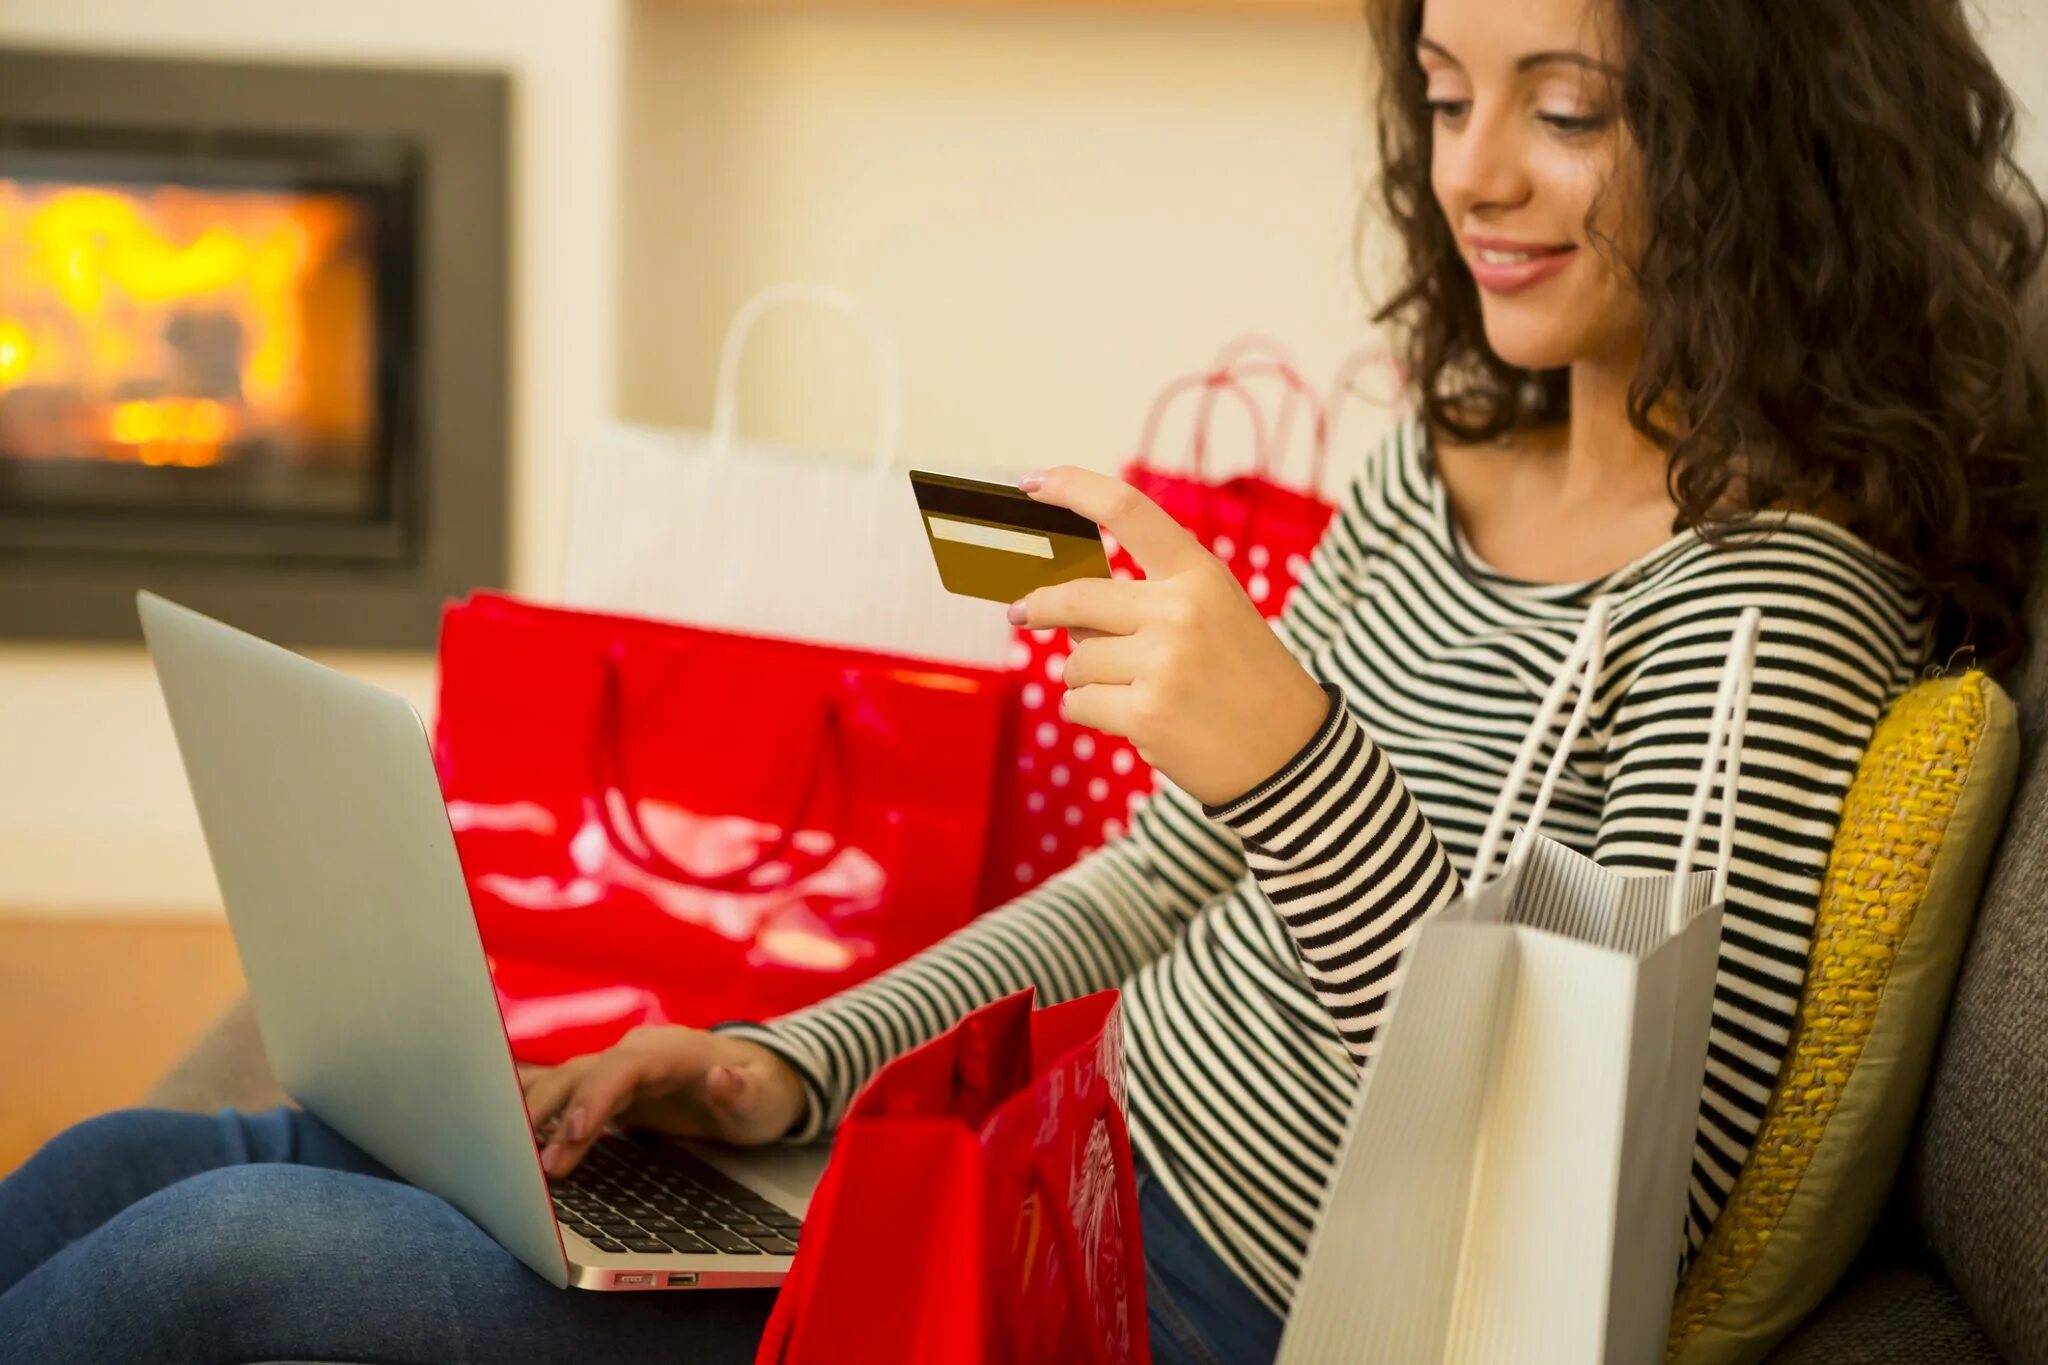 Doing your shopping. Интернет шоппинг. Покупки в интернете. Девушка покупает онлайн. Девушка делает покупки в интернете.